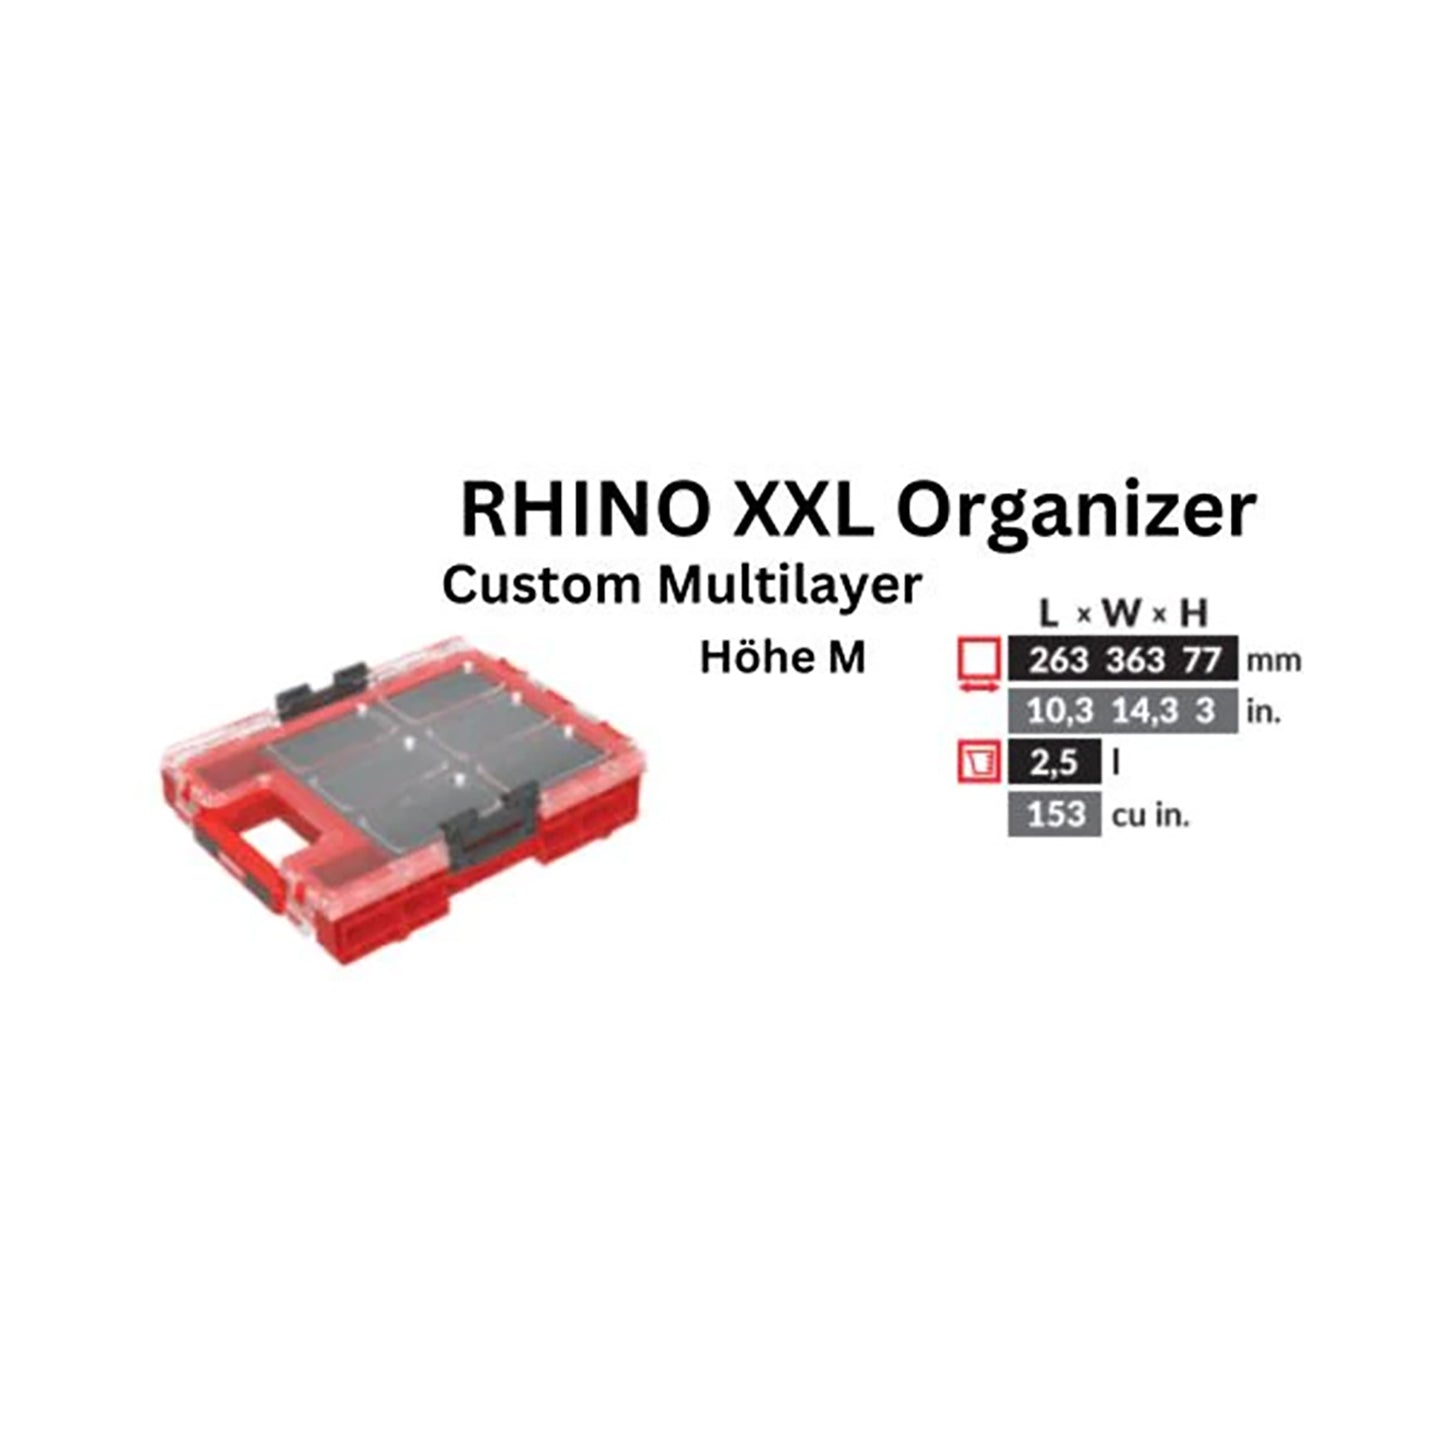 Toolbrothers RHINO XXL Organizer ULTRA Höhe M Custom Multilayer stapelbar 365 x 265 x 77 mm 2,5 l IP66 mit Schaumstoffeinlage